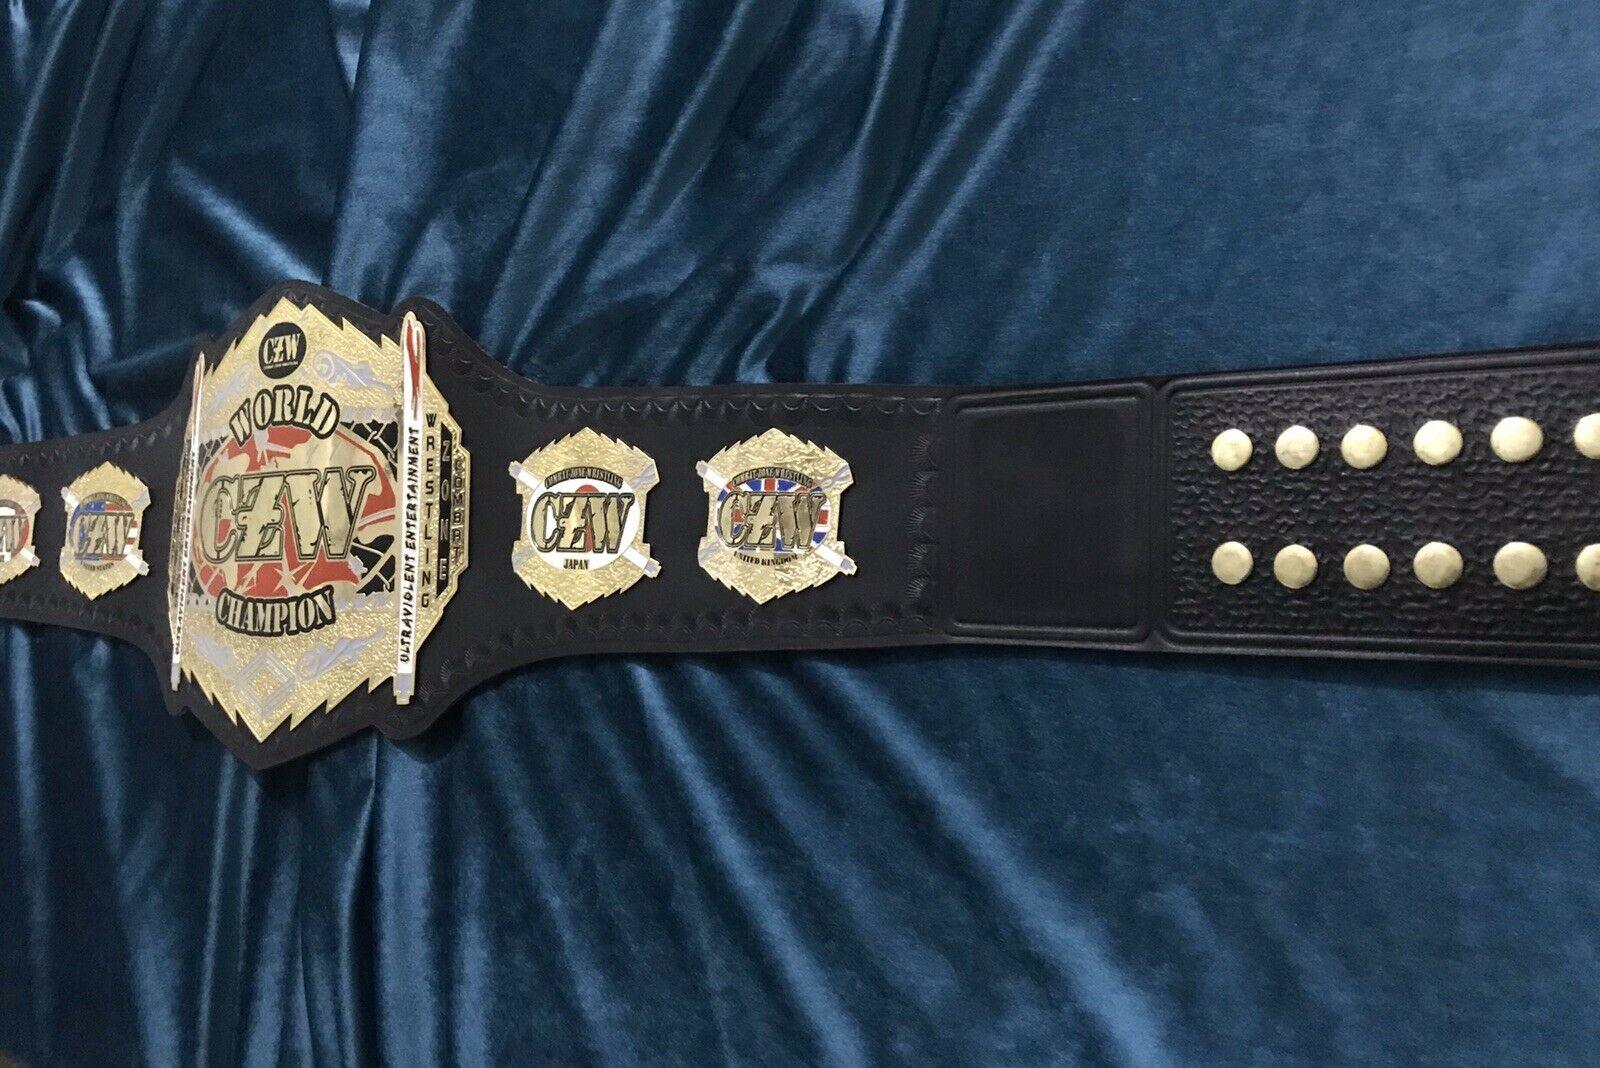 CZW Championship Belt | Zees Belts